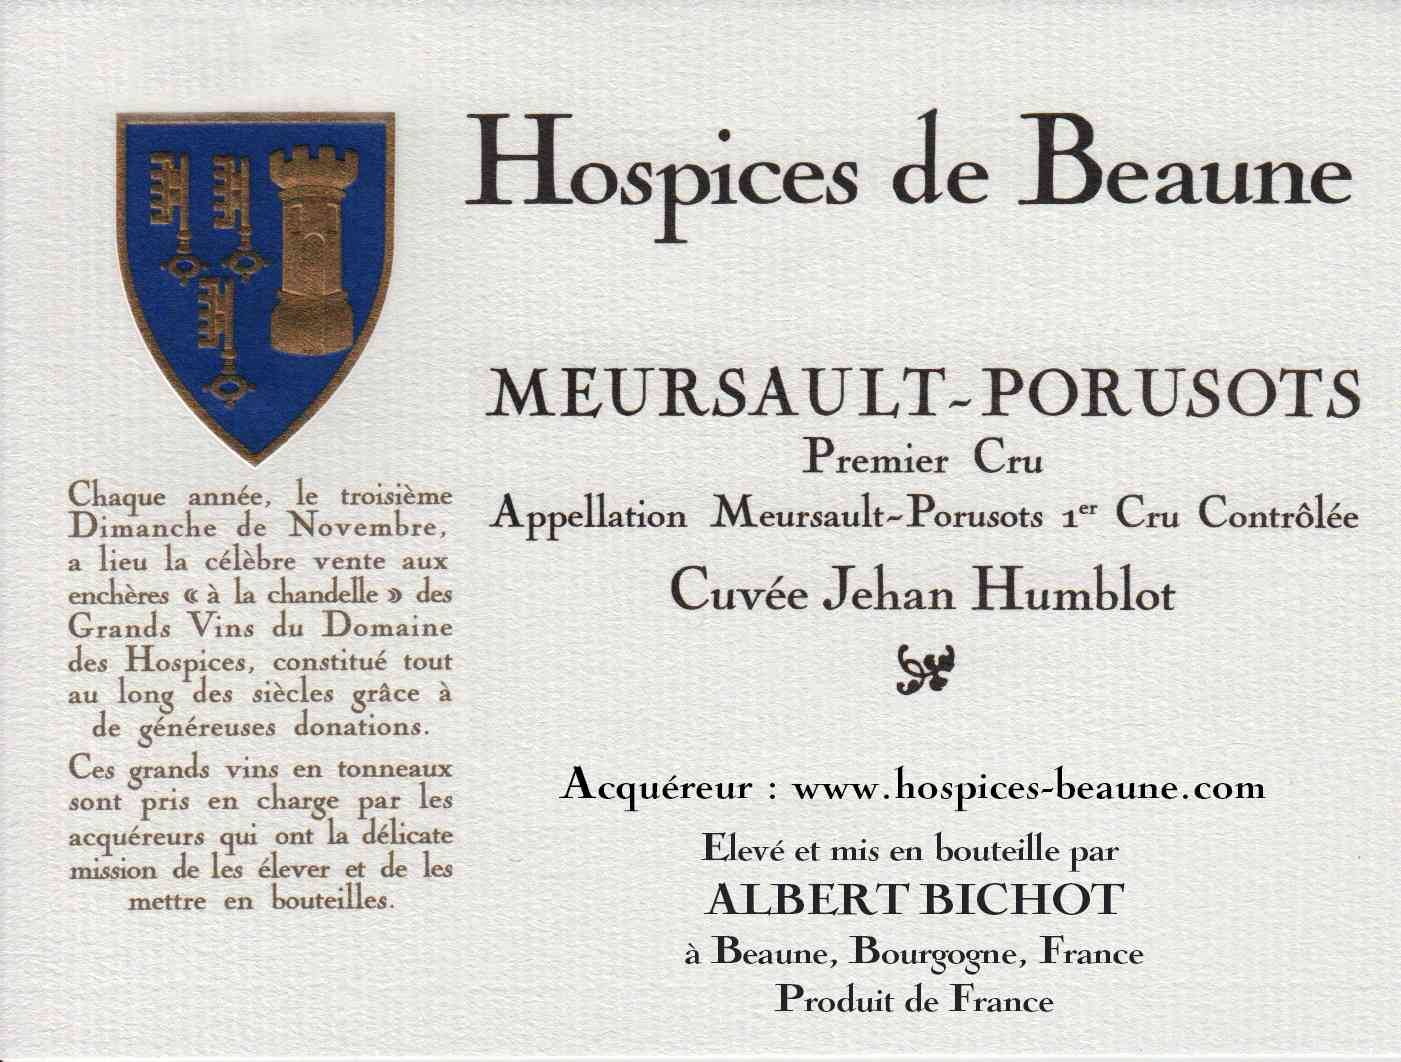 Encheres-auction-HospicesdeBeaune-AlbertBichot-Meursault-Porusots-PremierCru-Cuvee-JehanHublot